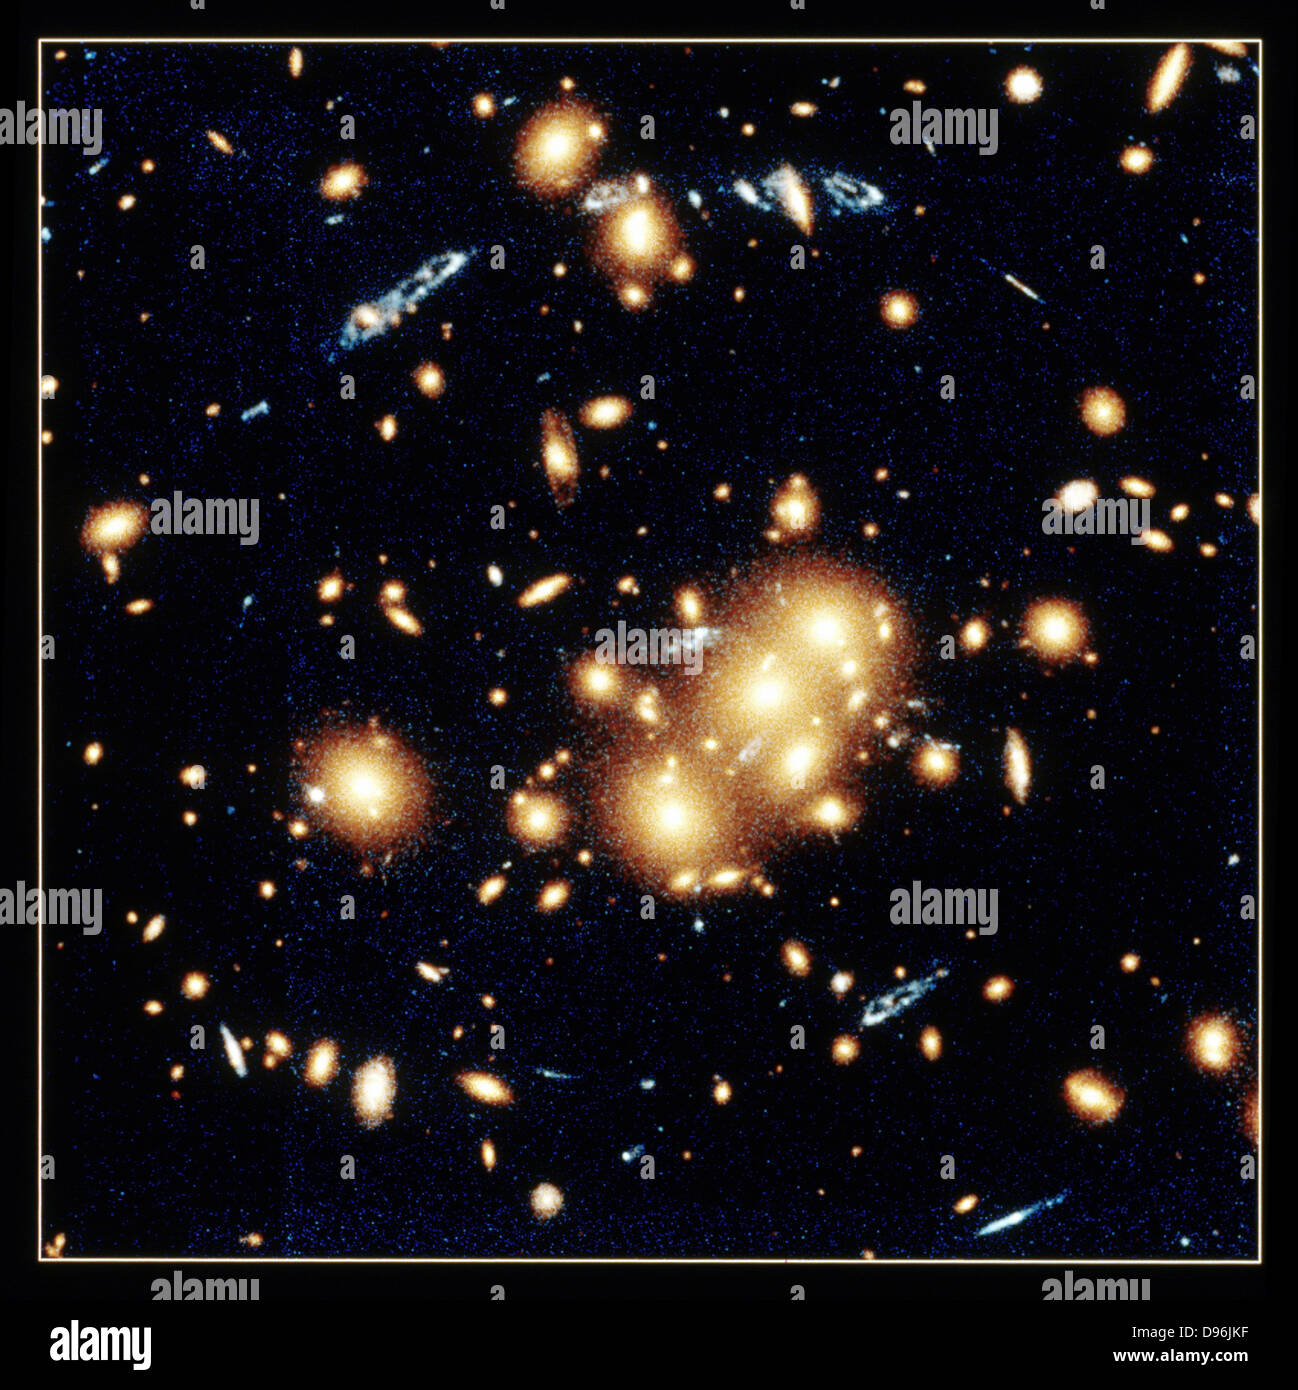 Lente gravitacional fotografías e imágenes de alta resolución - Alamy